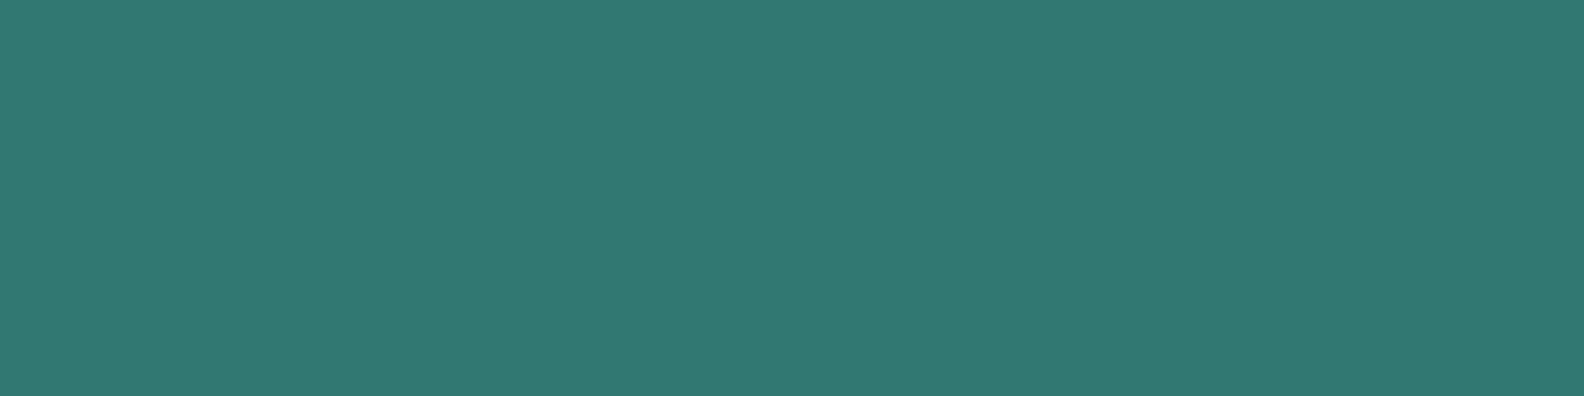 1584x396 Myrtle Green Solid Color Background